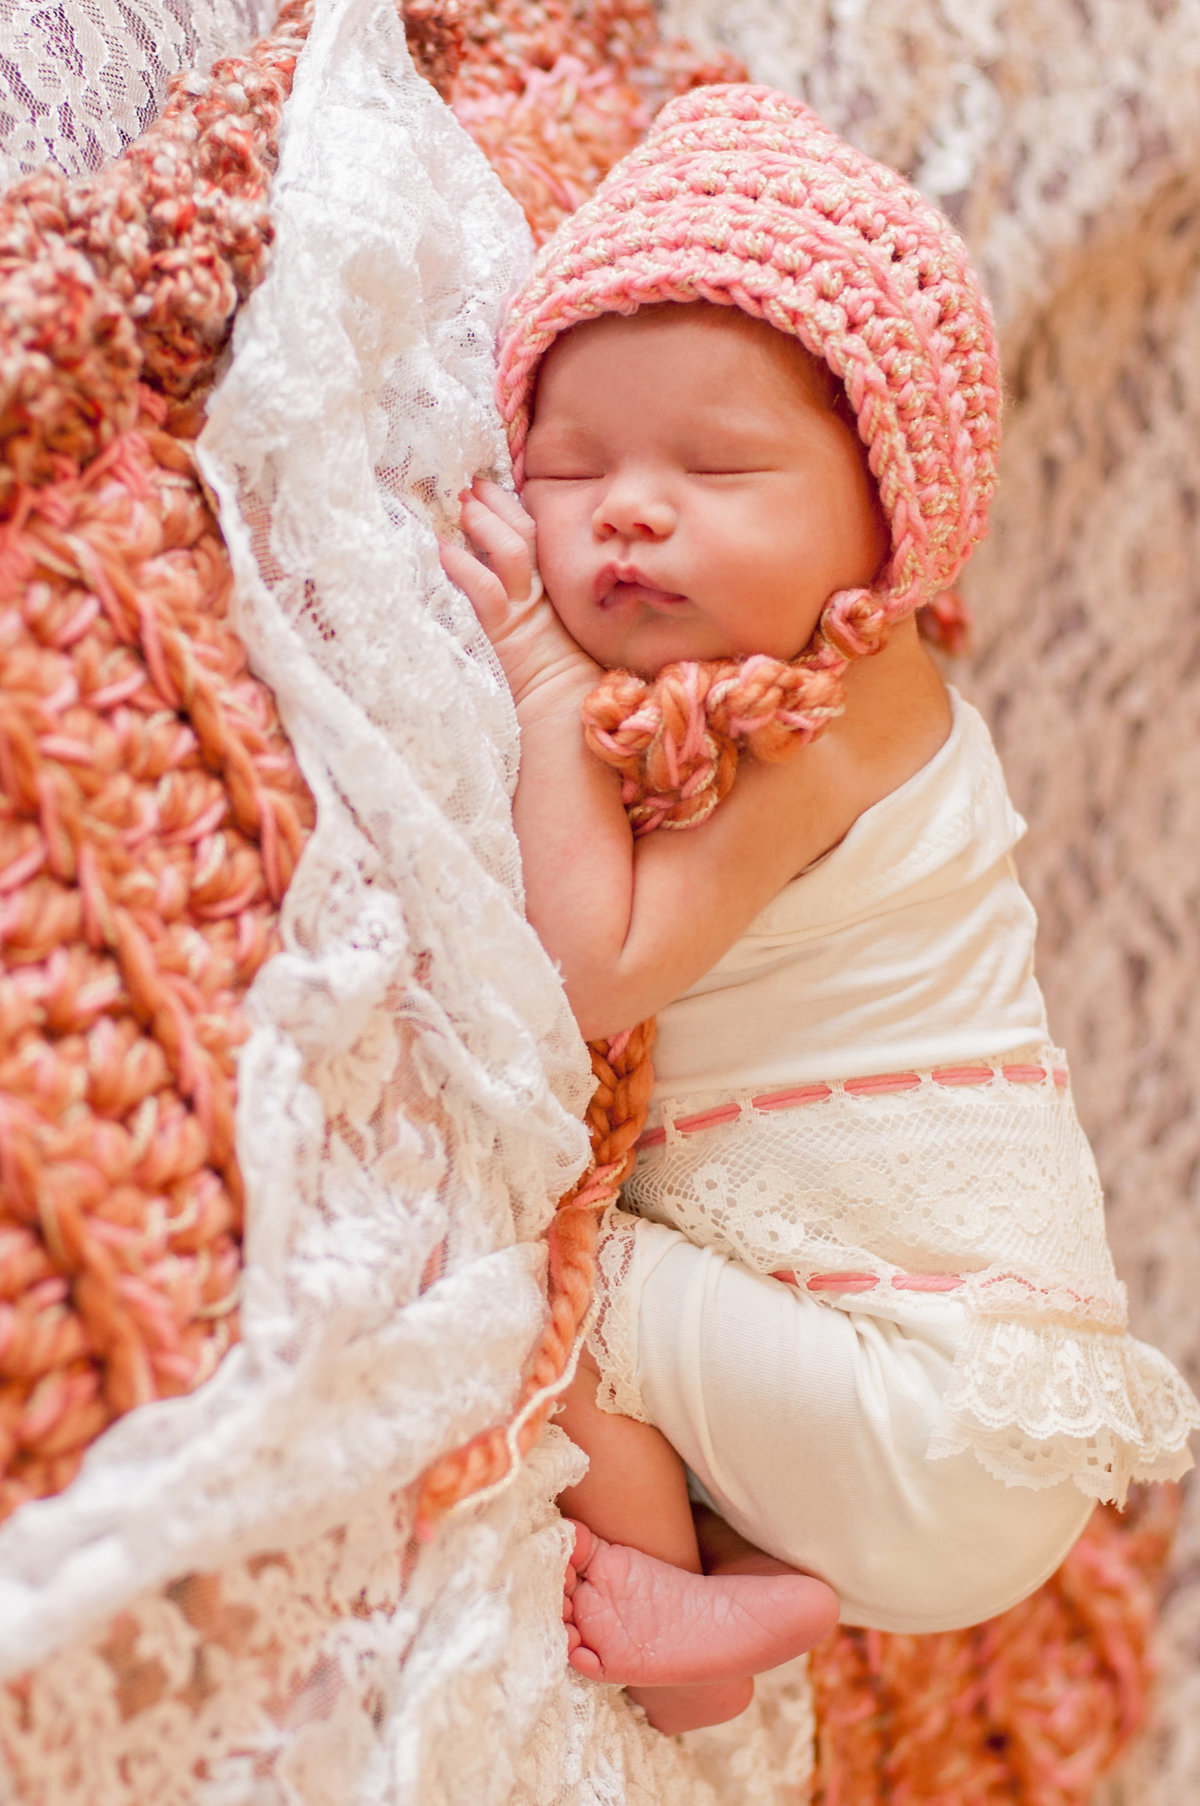 Cute Newborn Home photoshoot | One Shot beyond Photography